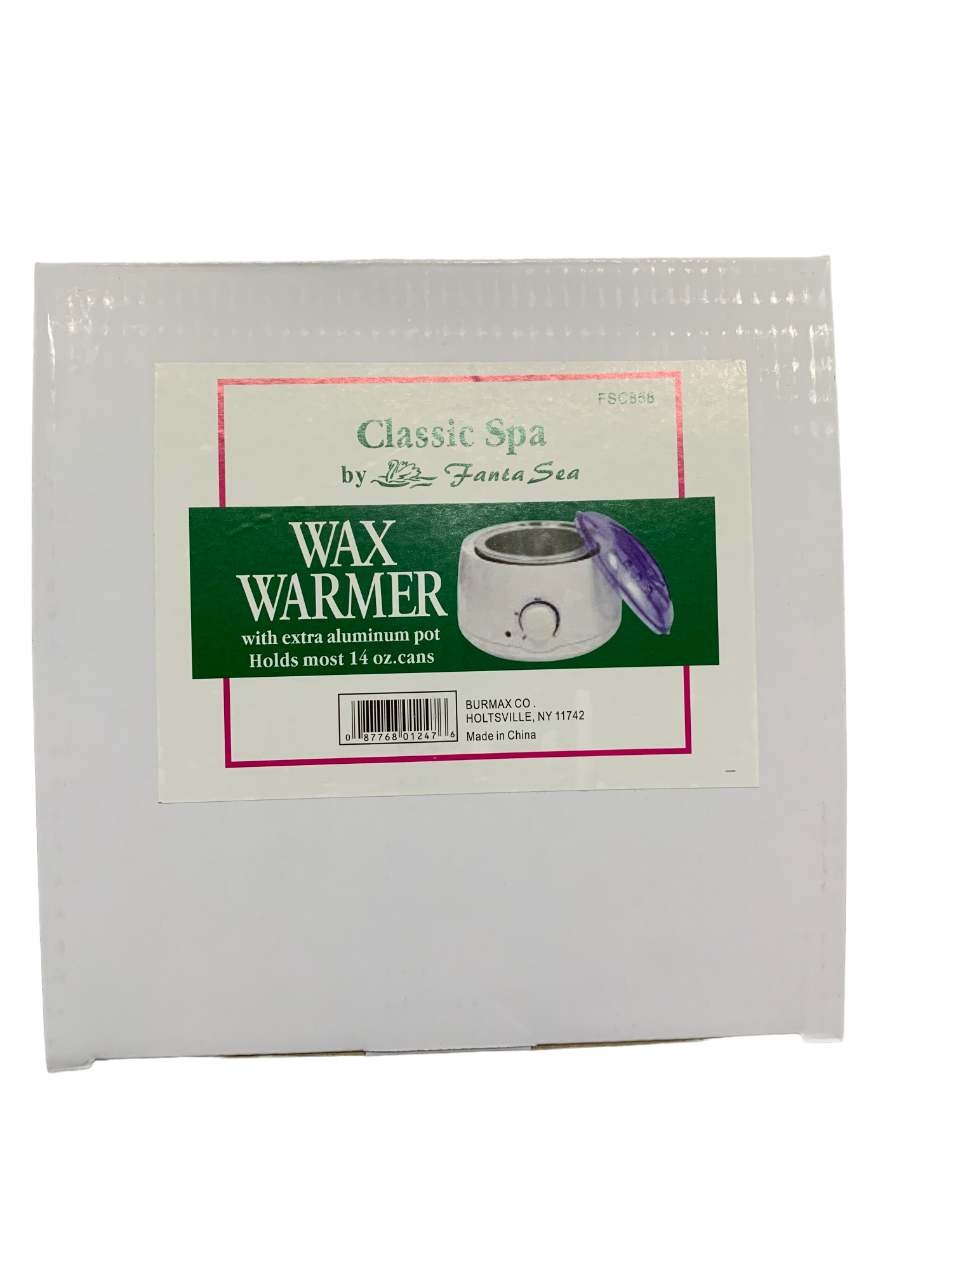 Classic Spa Wax Warmer